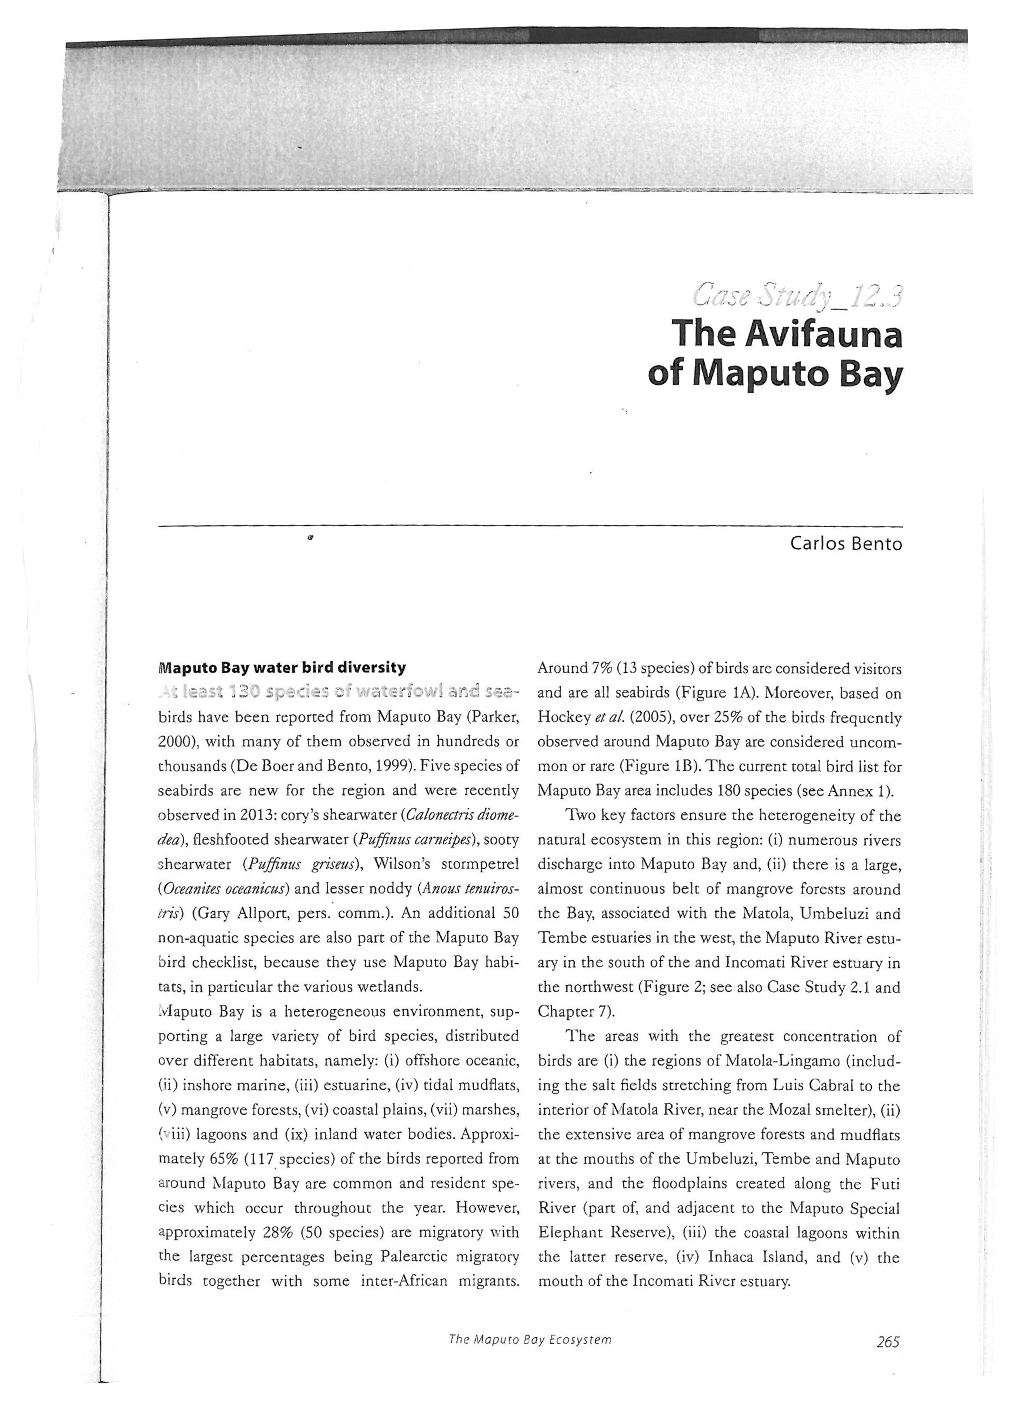 The Avifauna of Maputo Bay